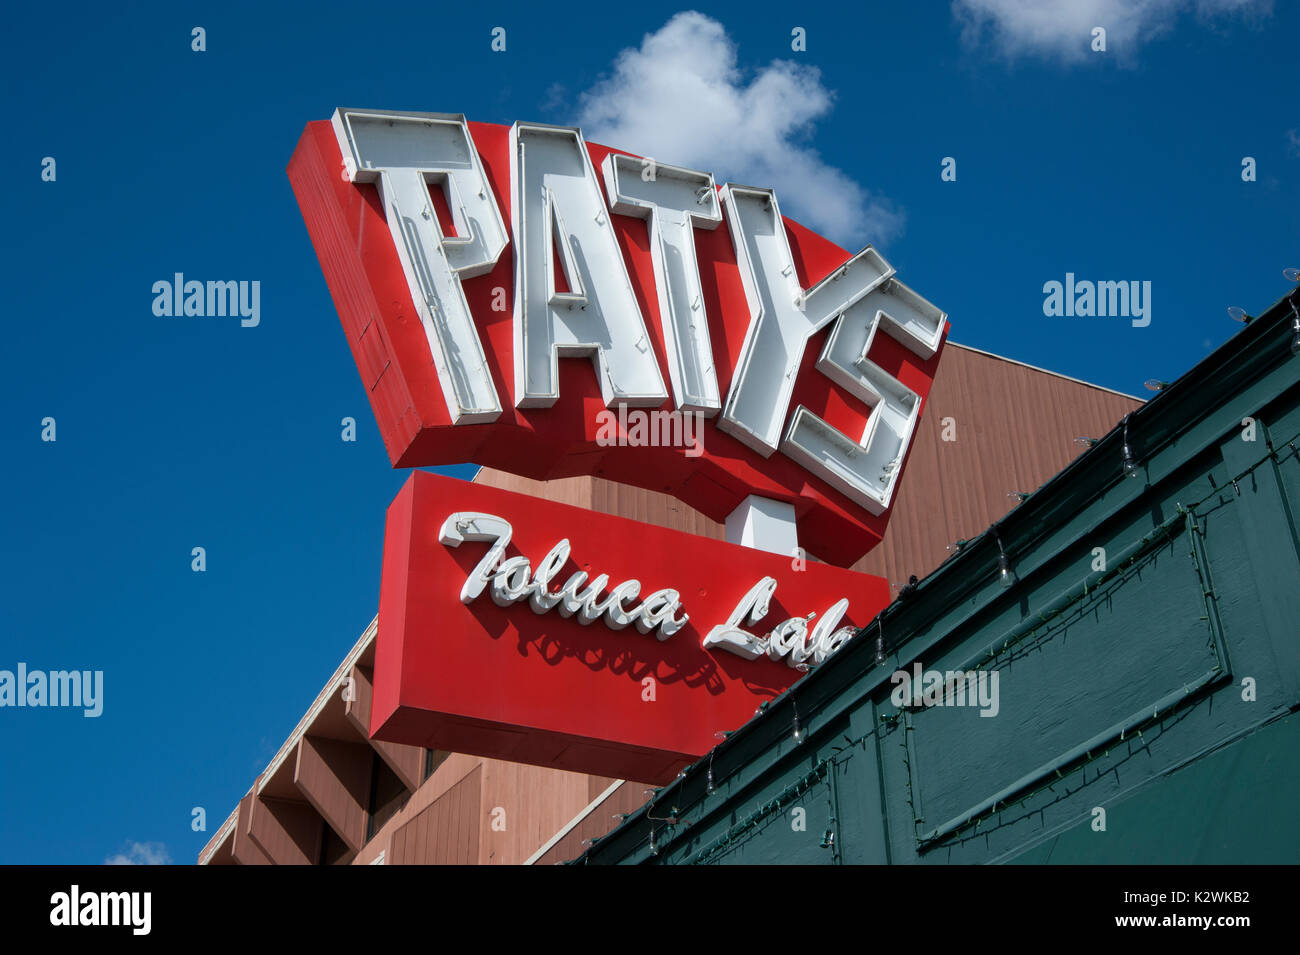 Patys classic Diner Zeichen in Toluca Lake Gegend des San Fernando Valley in Los Angeles, CA Stockfoto